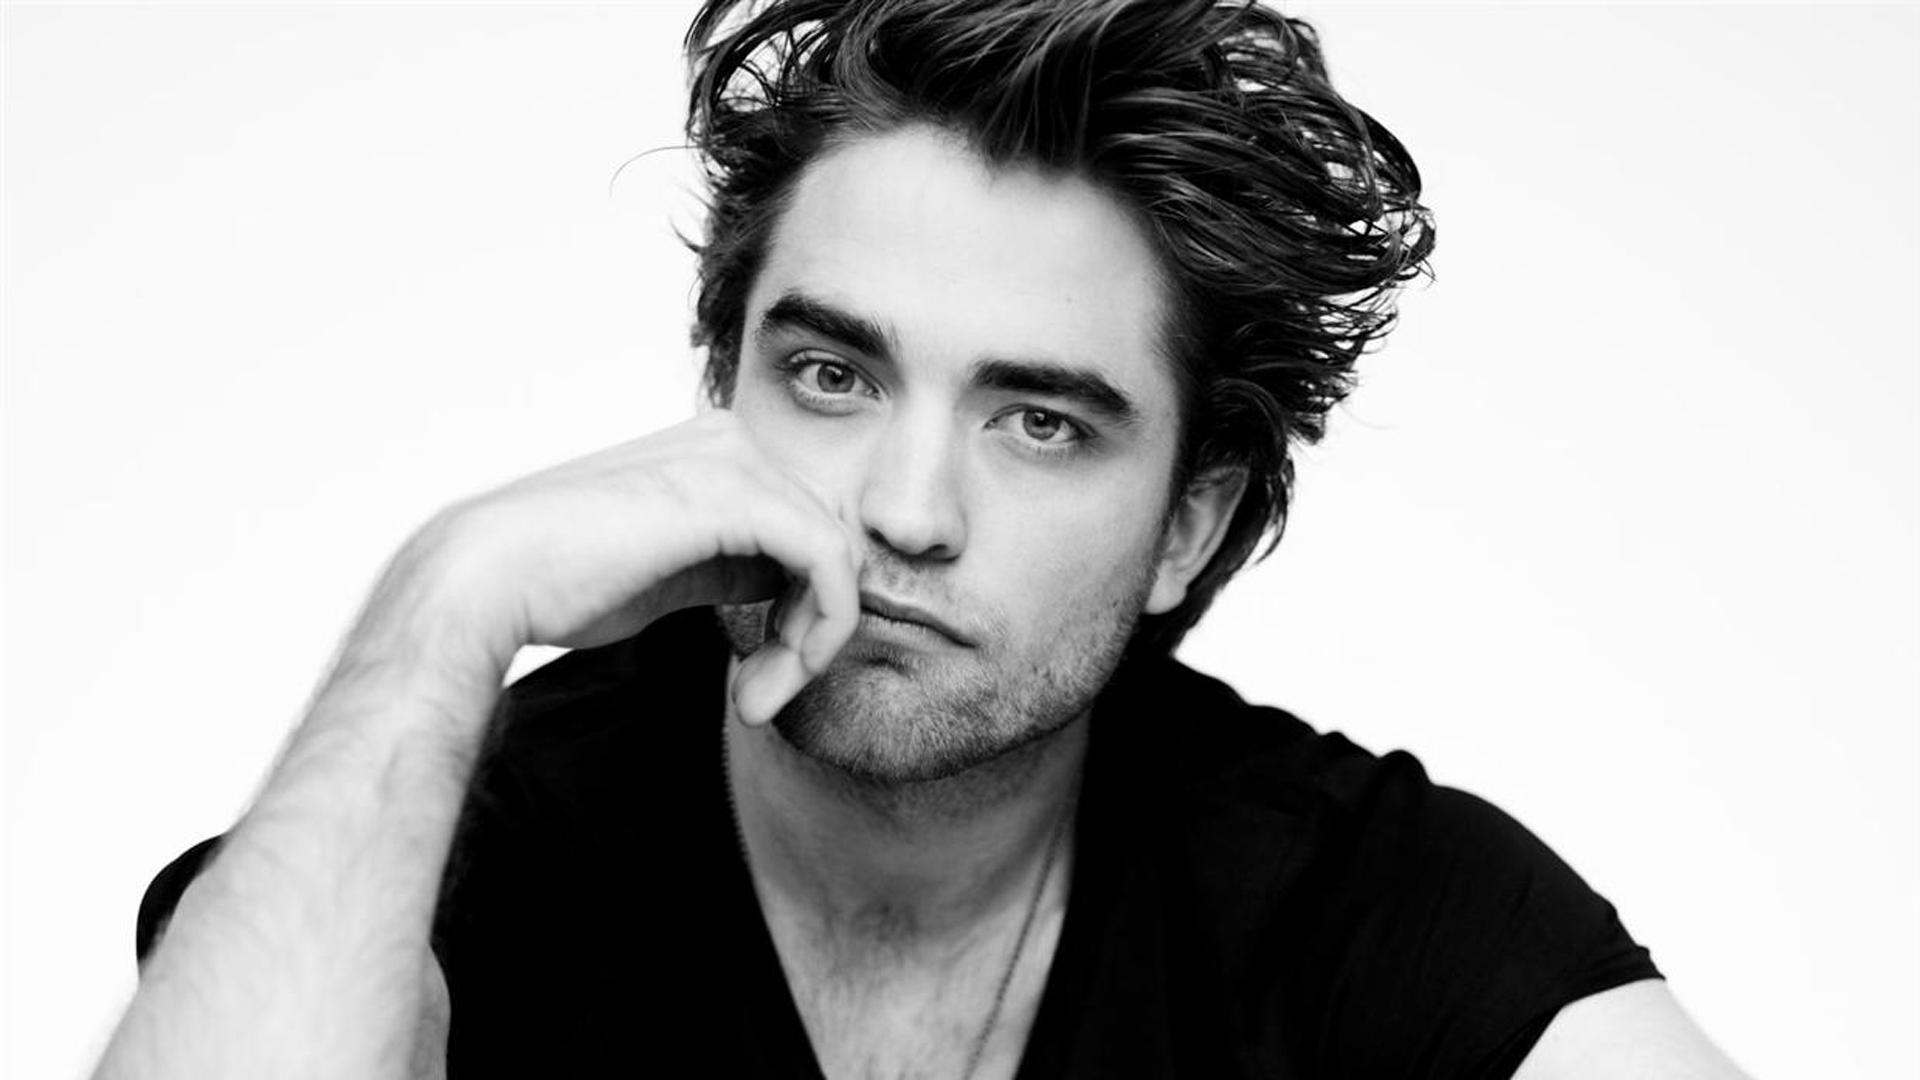 Robert Pattinson HD Wallpaper